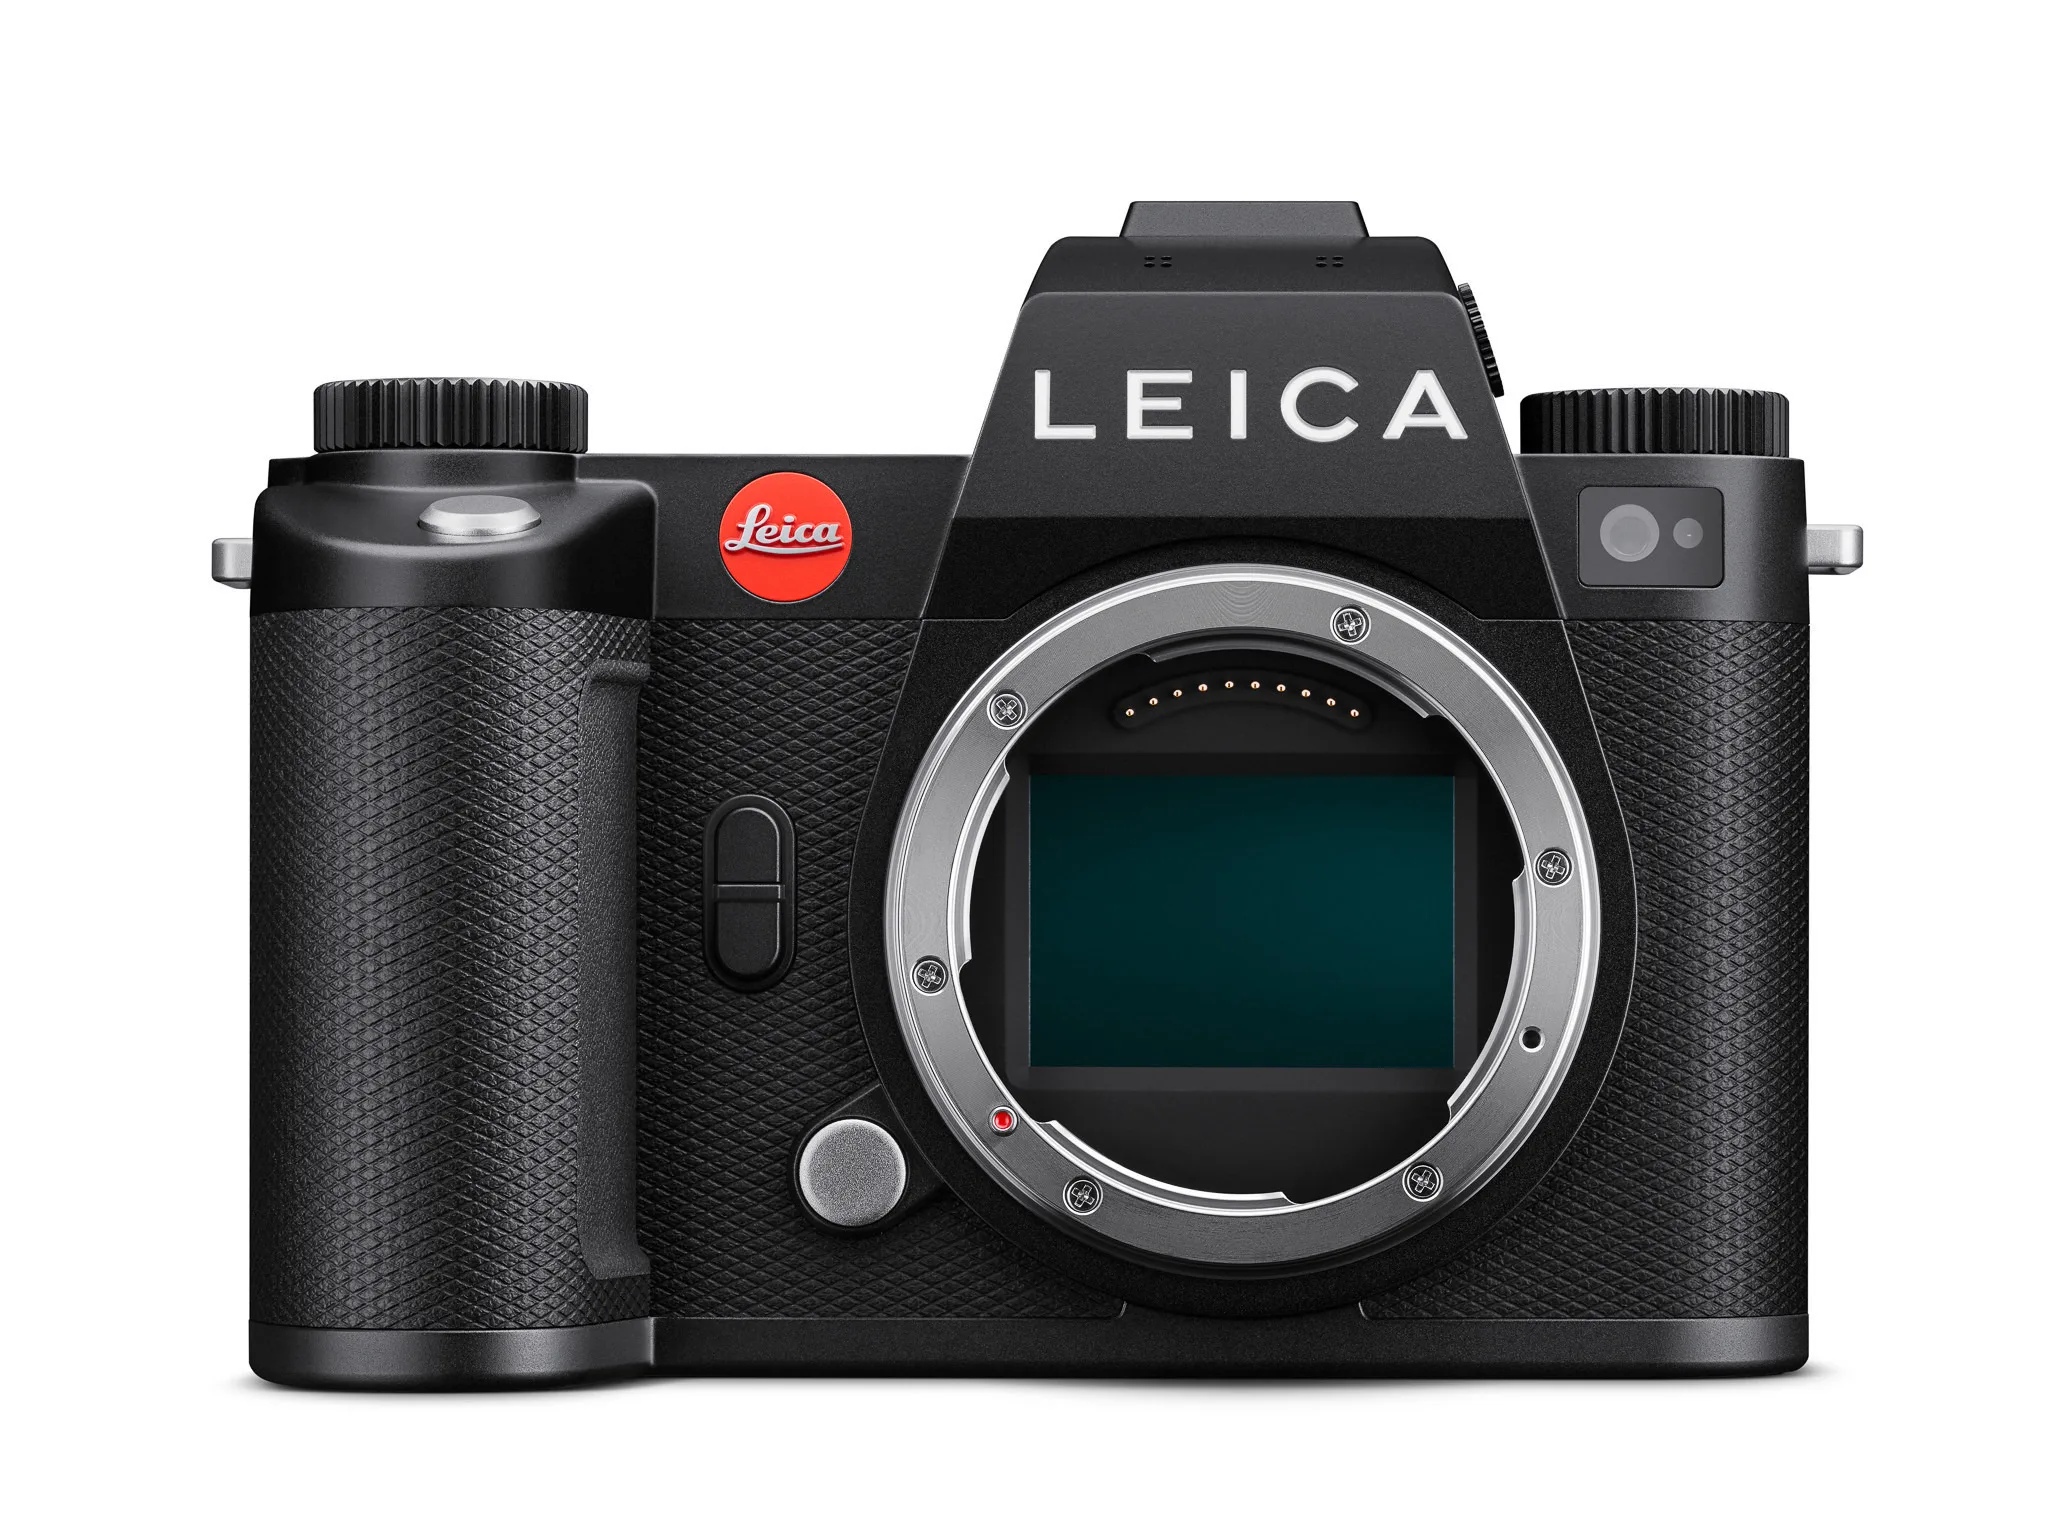 Anh san pham Leica SL3 ONTOP.vn 9